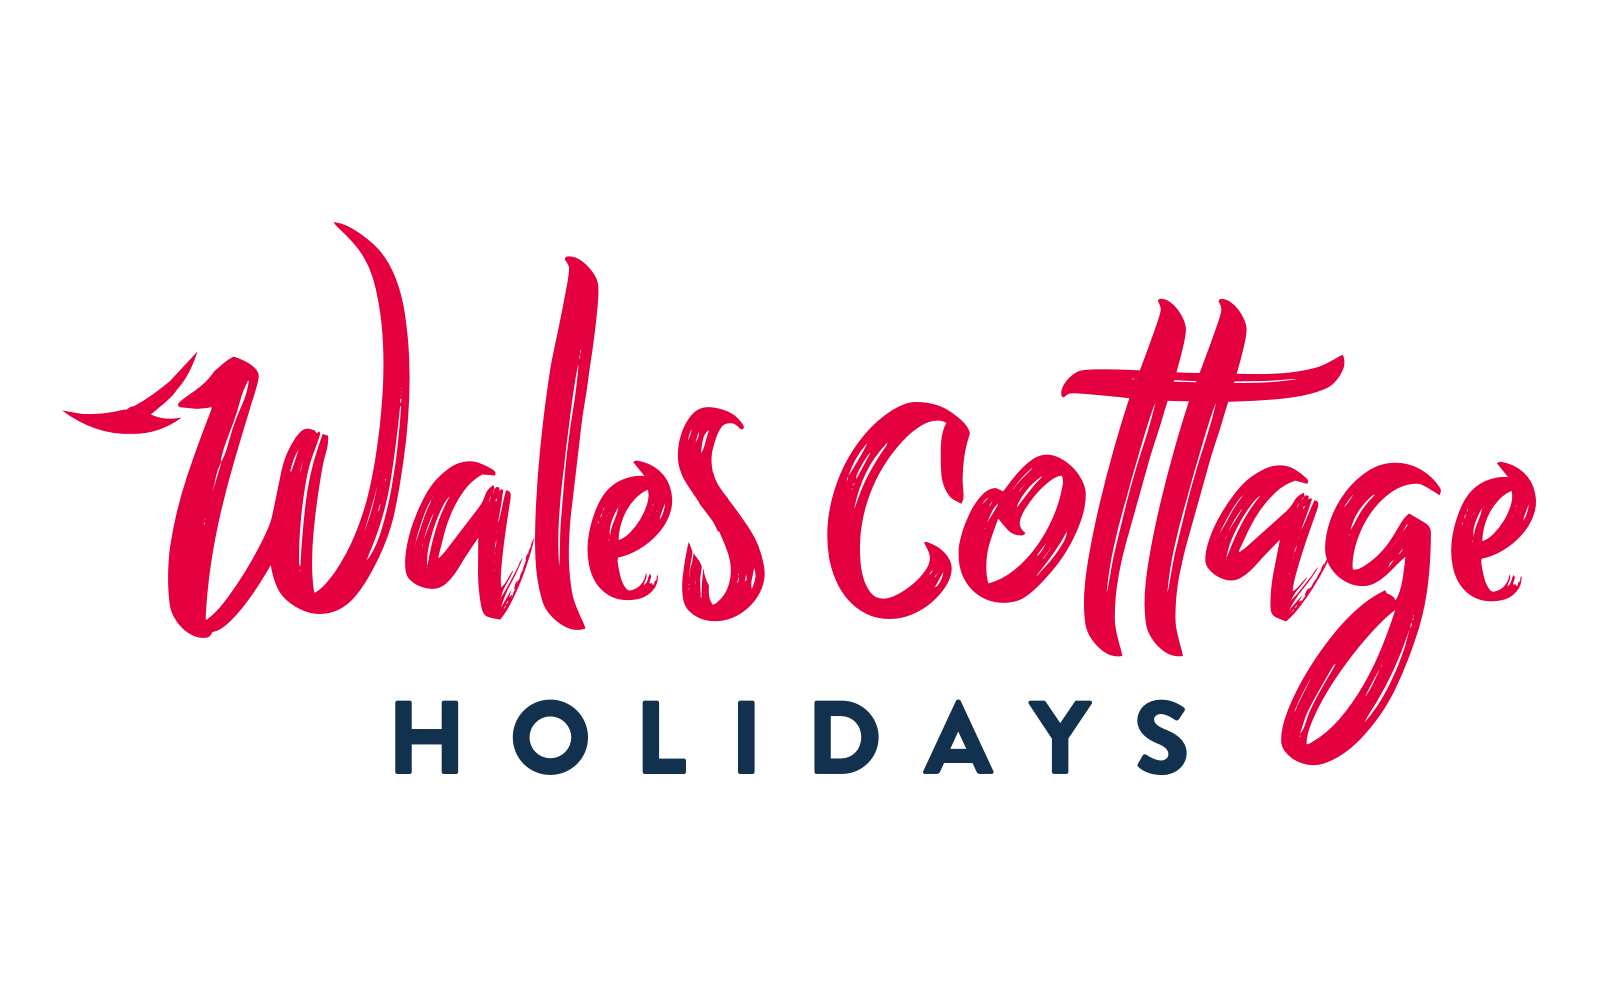 Wales Cottage Holidays website